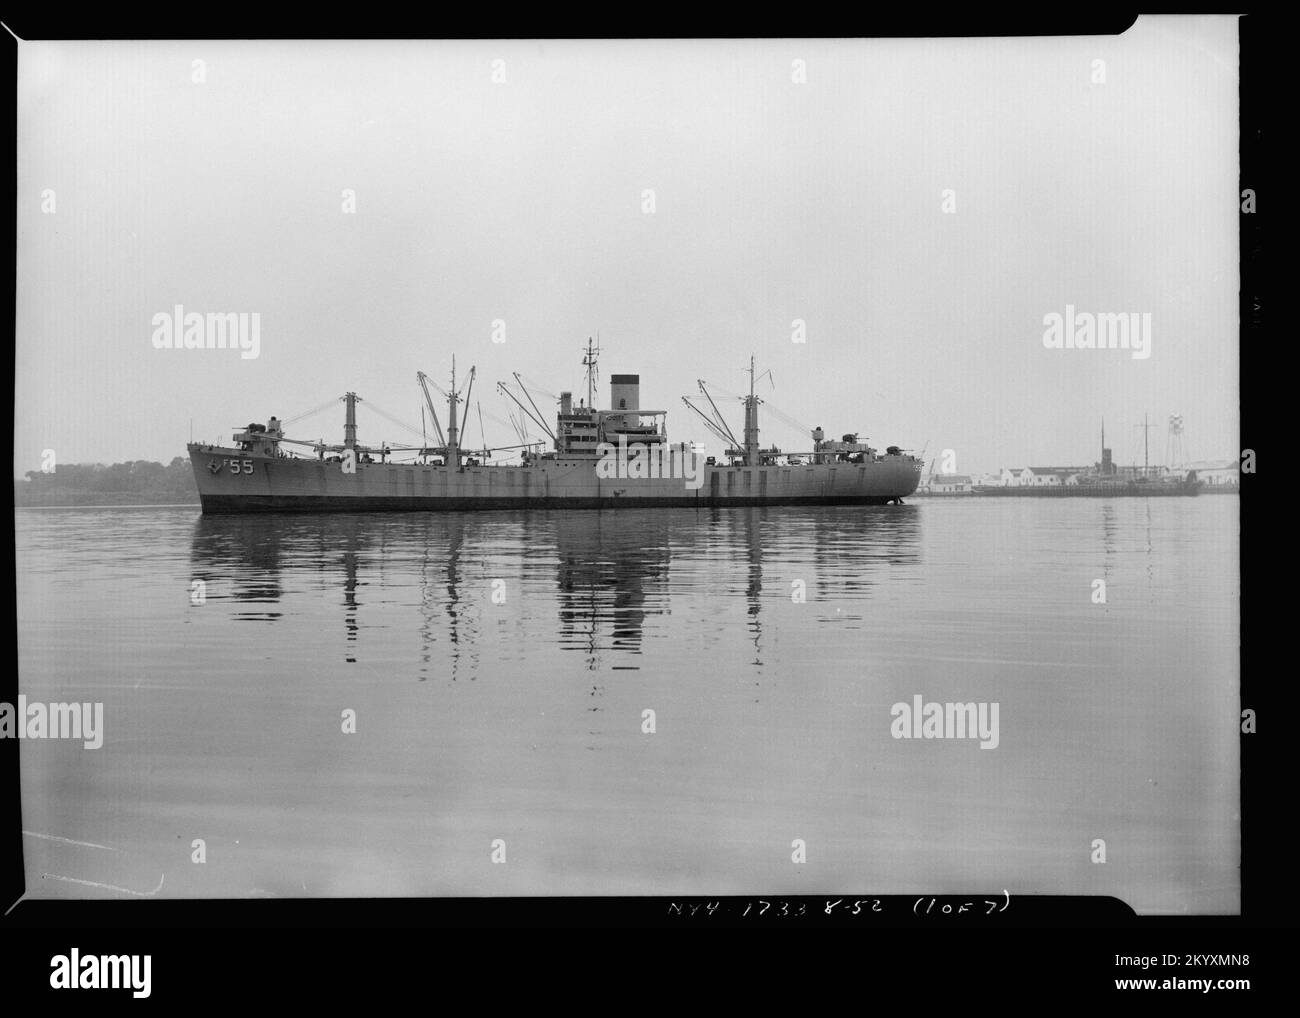 AF-55 Aludra , Ships, Naval Vessels, Boats, Naval History, Navy Stock Photo